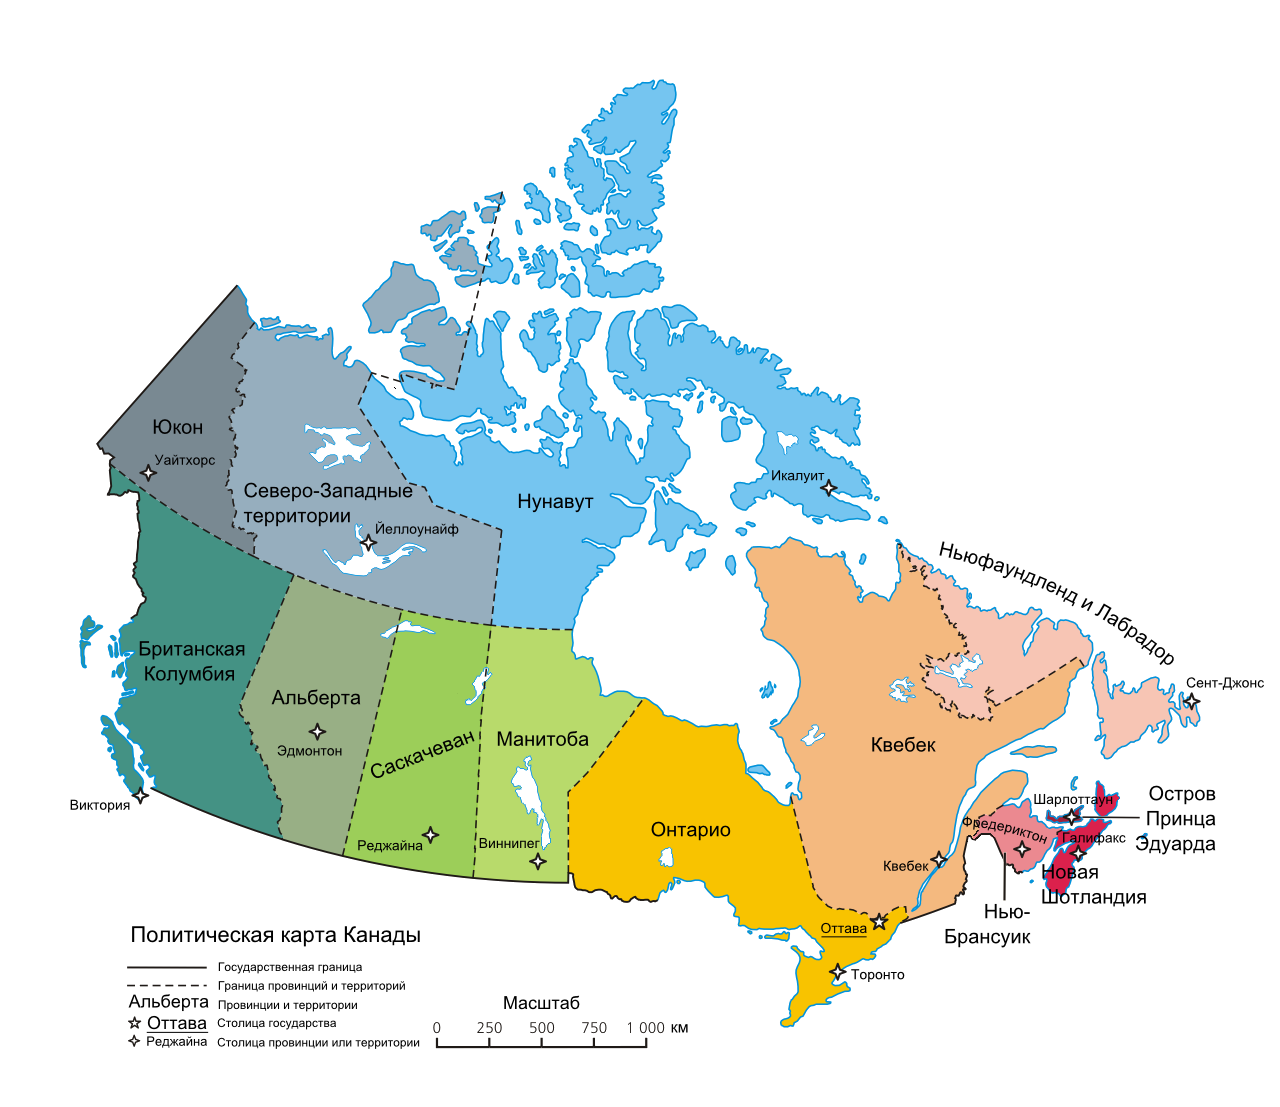 Провинции Канады на карте